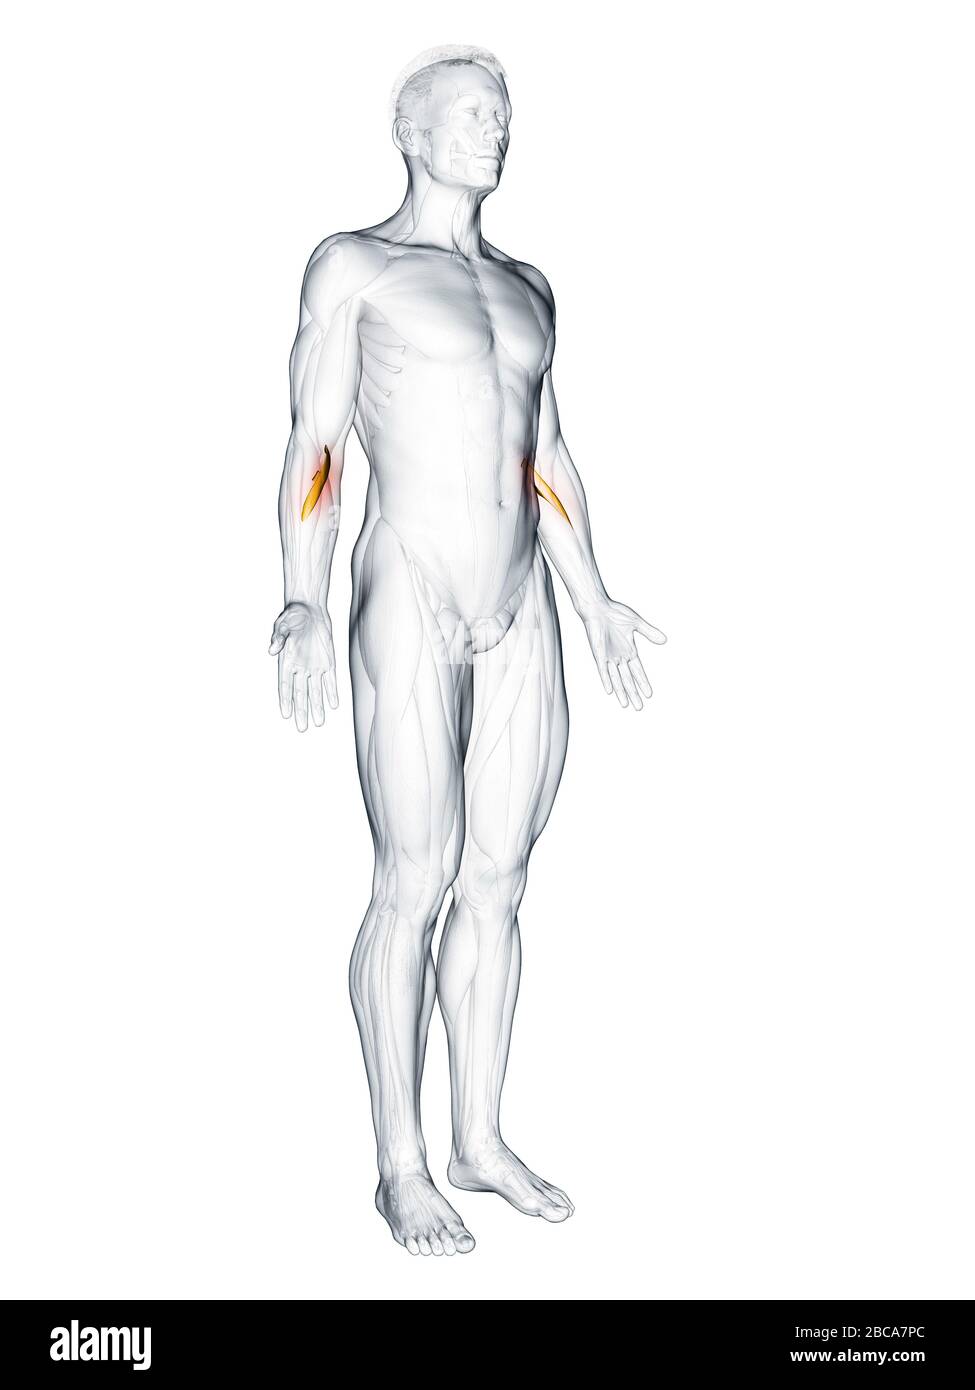 Pronator teres muscle, illustration. Stock Photo